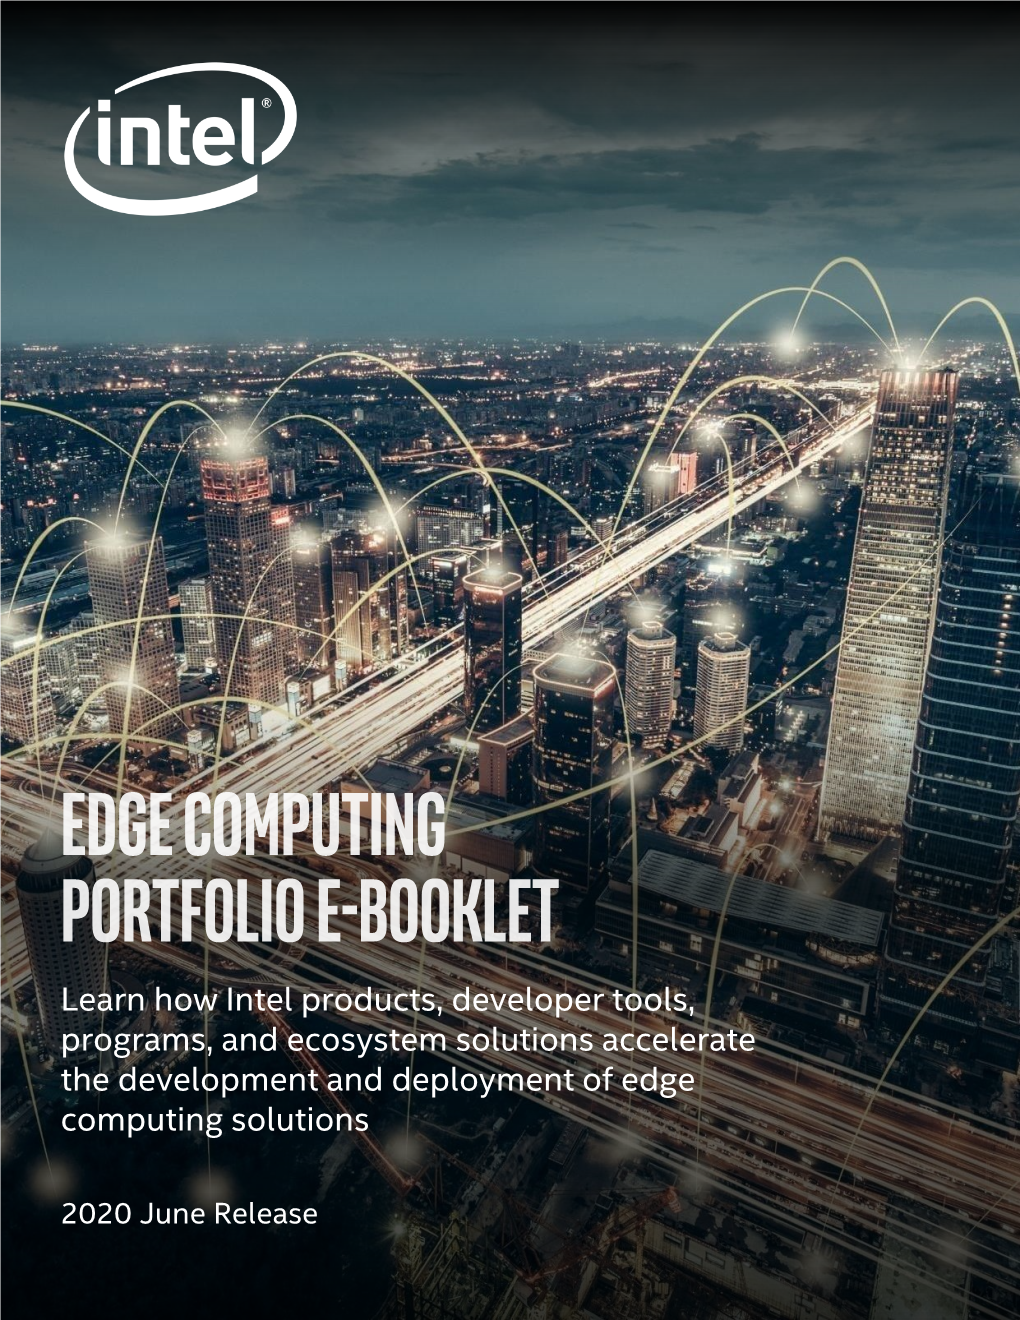 Intel Edge Computing Portfolio E-Booklet 2020